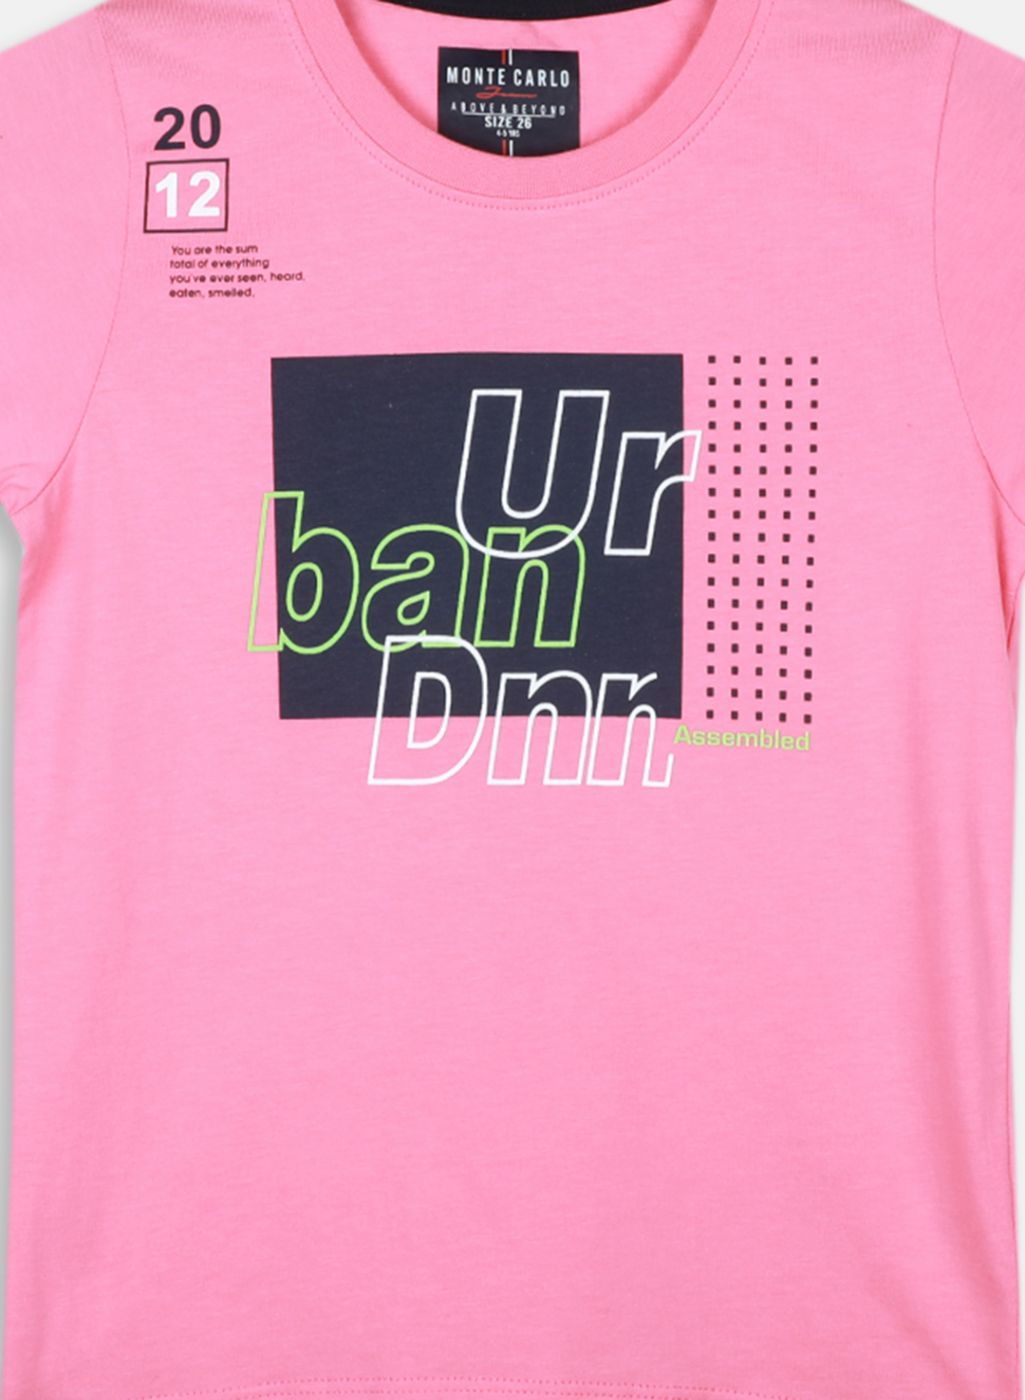 Boys Multi Color Printed T-Shirt